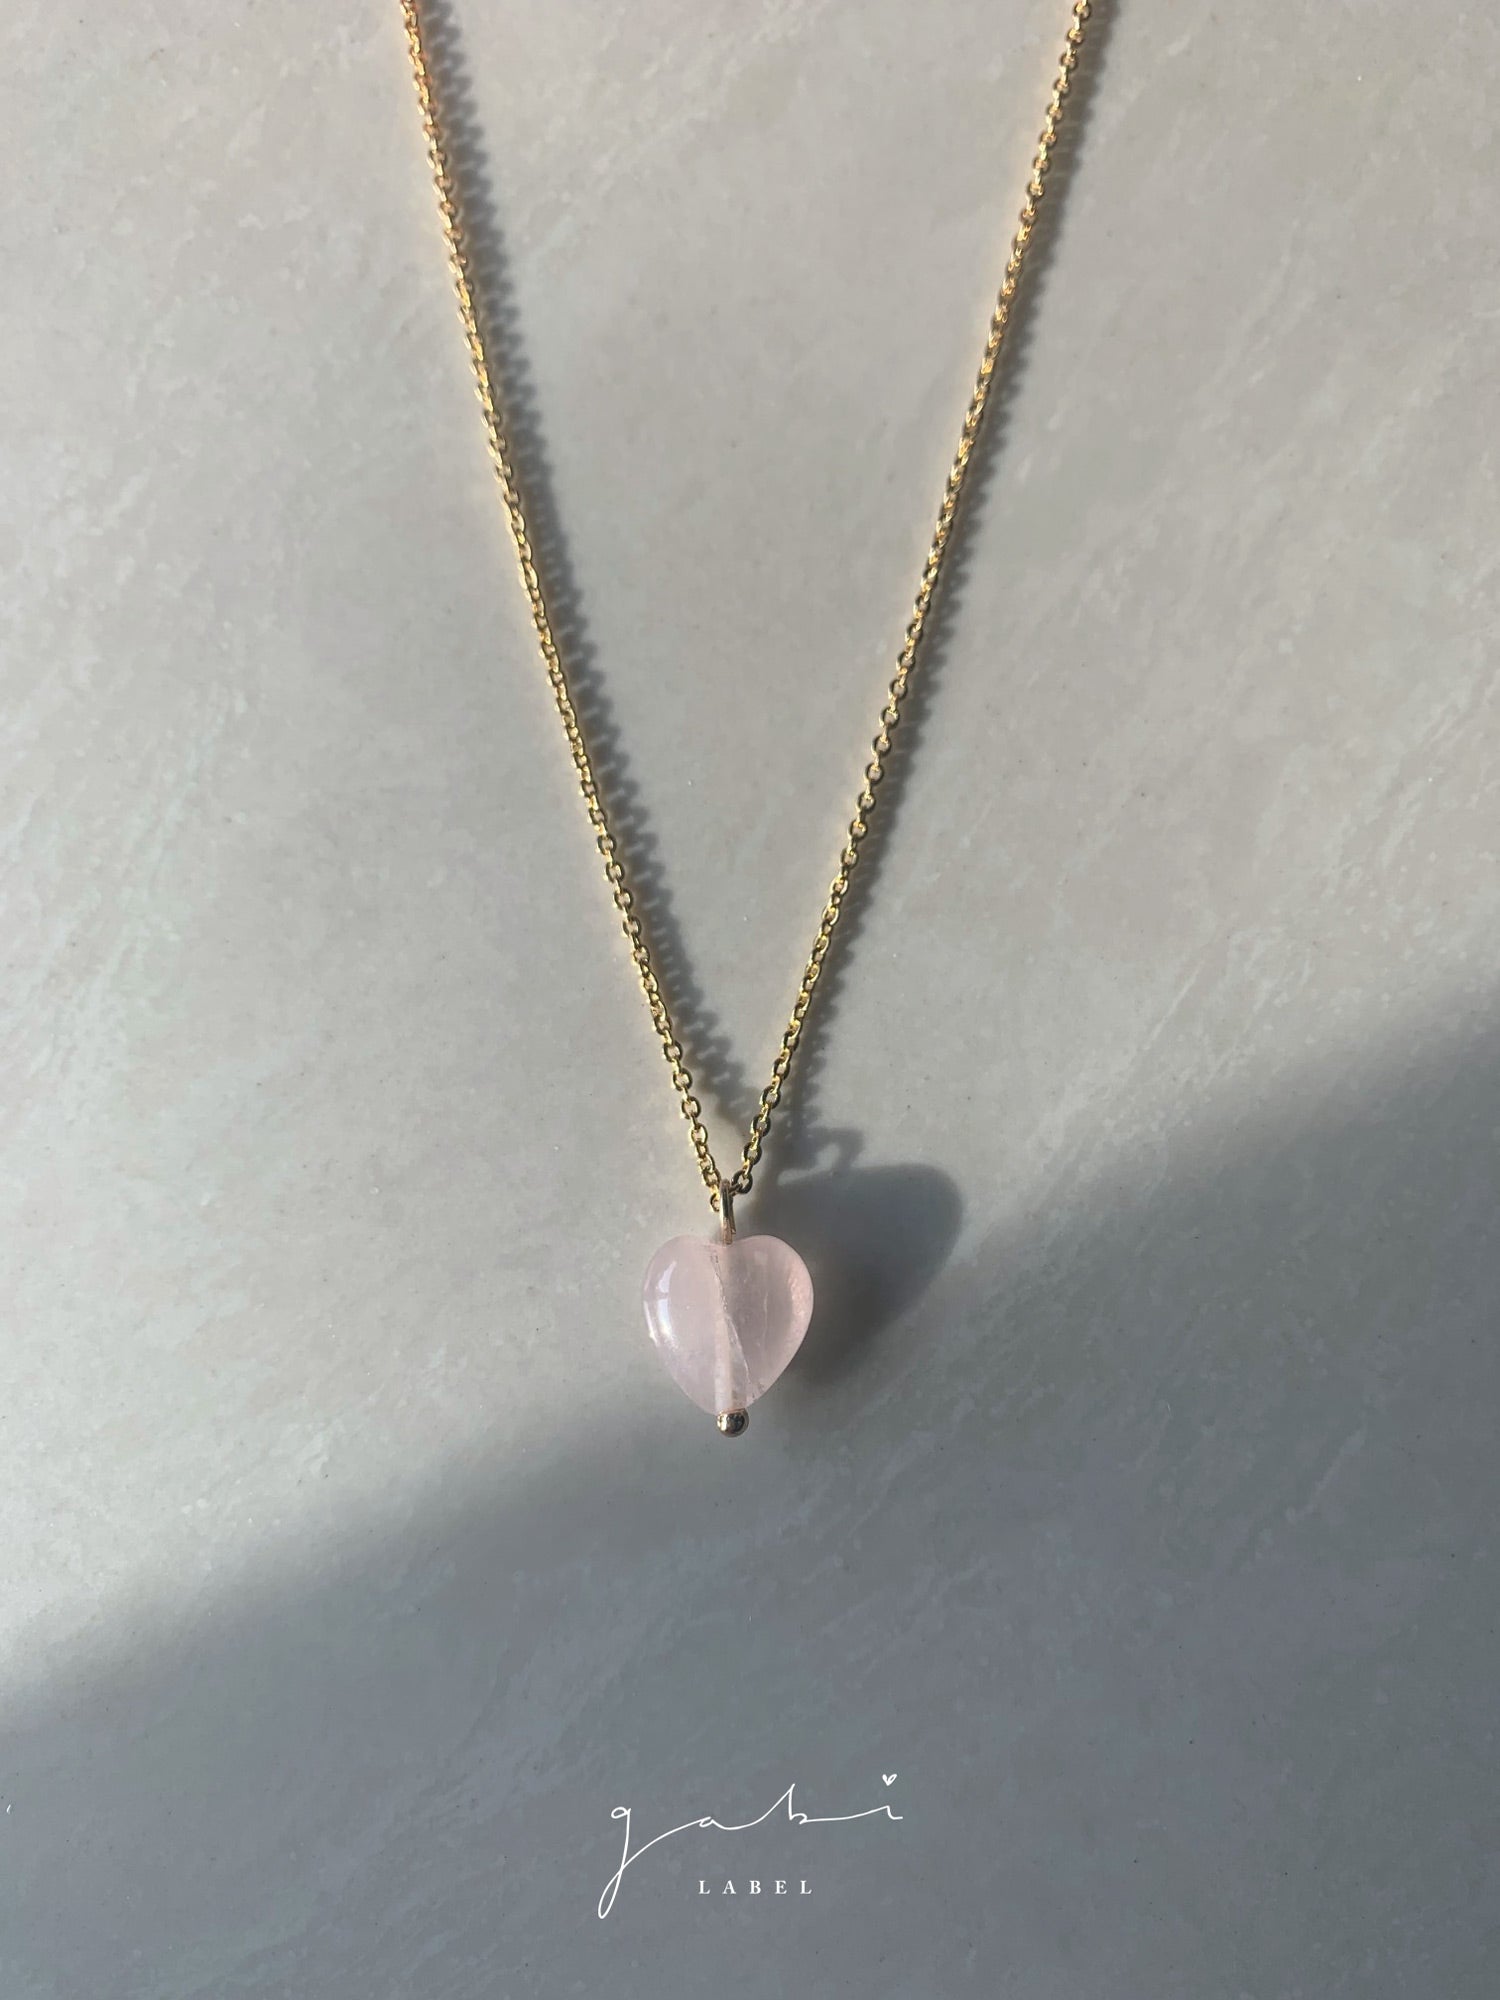 pink heart necklace 2f344d73 1e7f 46ad b40b 6c86a90cbaec